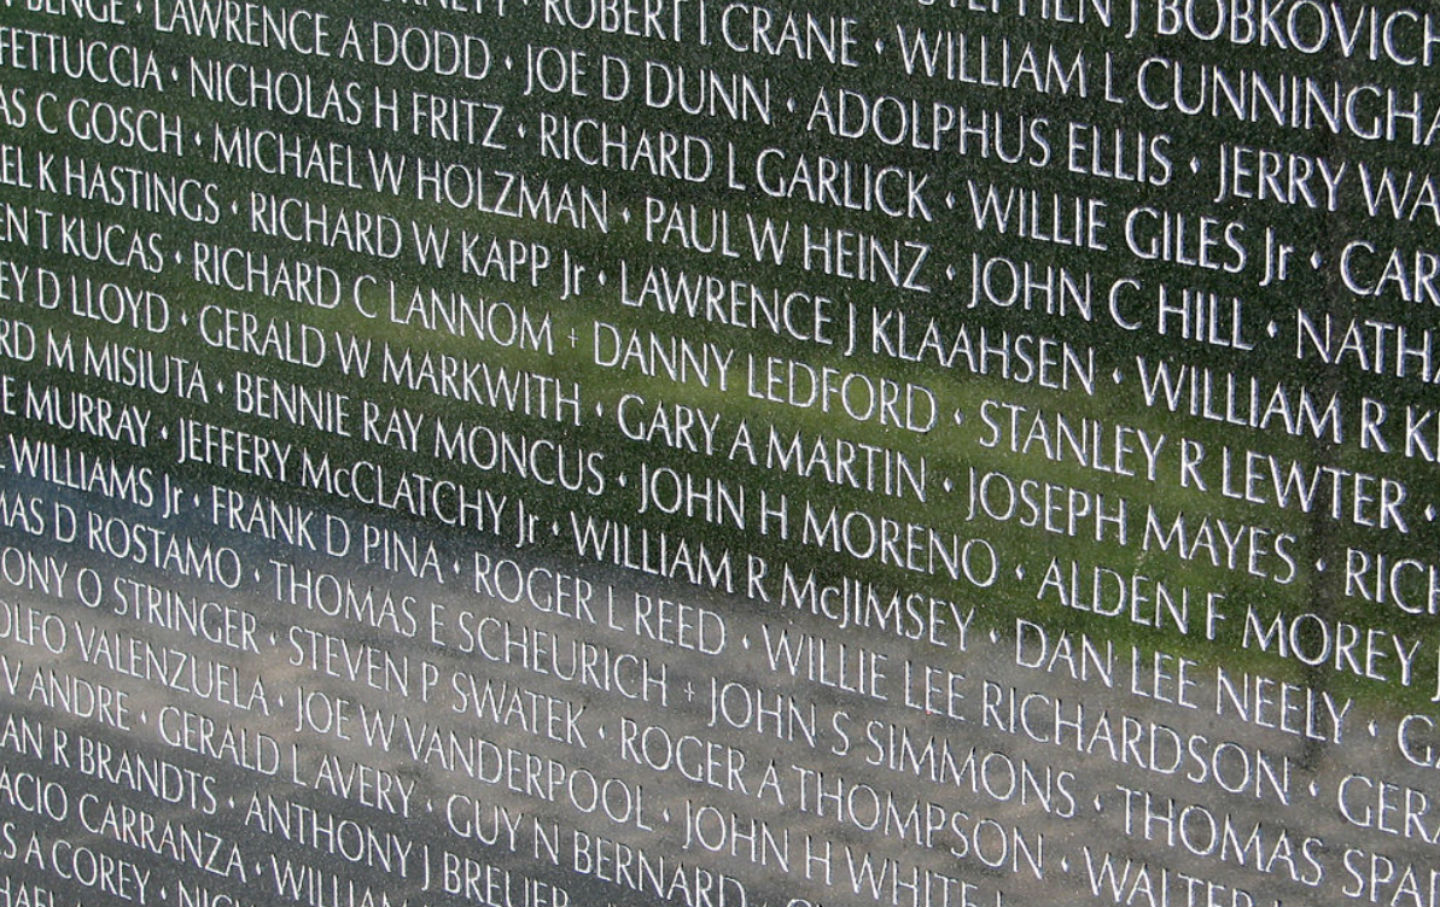 November 13, 1982: The Vietnam Veterans Memorial Is Dedicated in Washington, DC